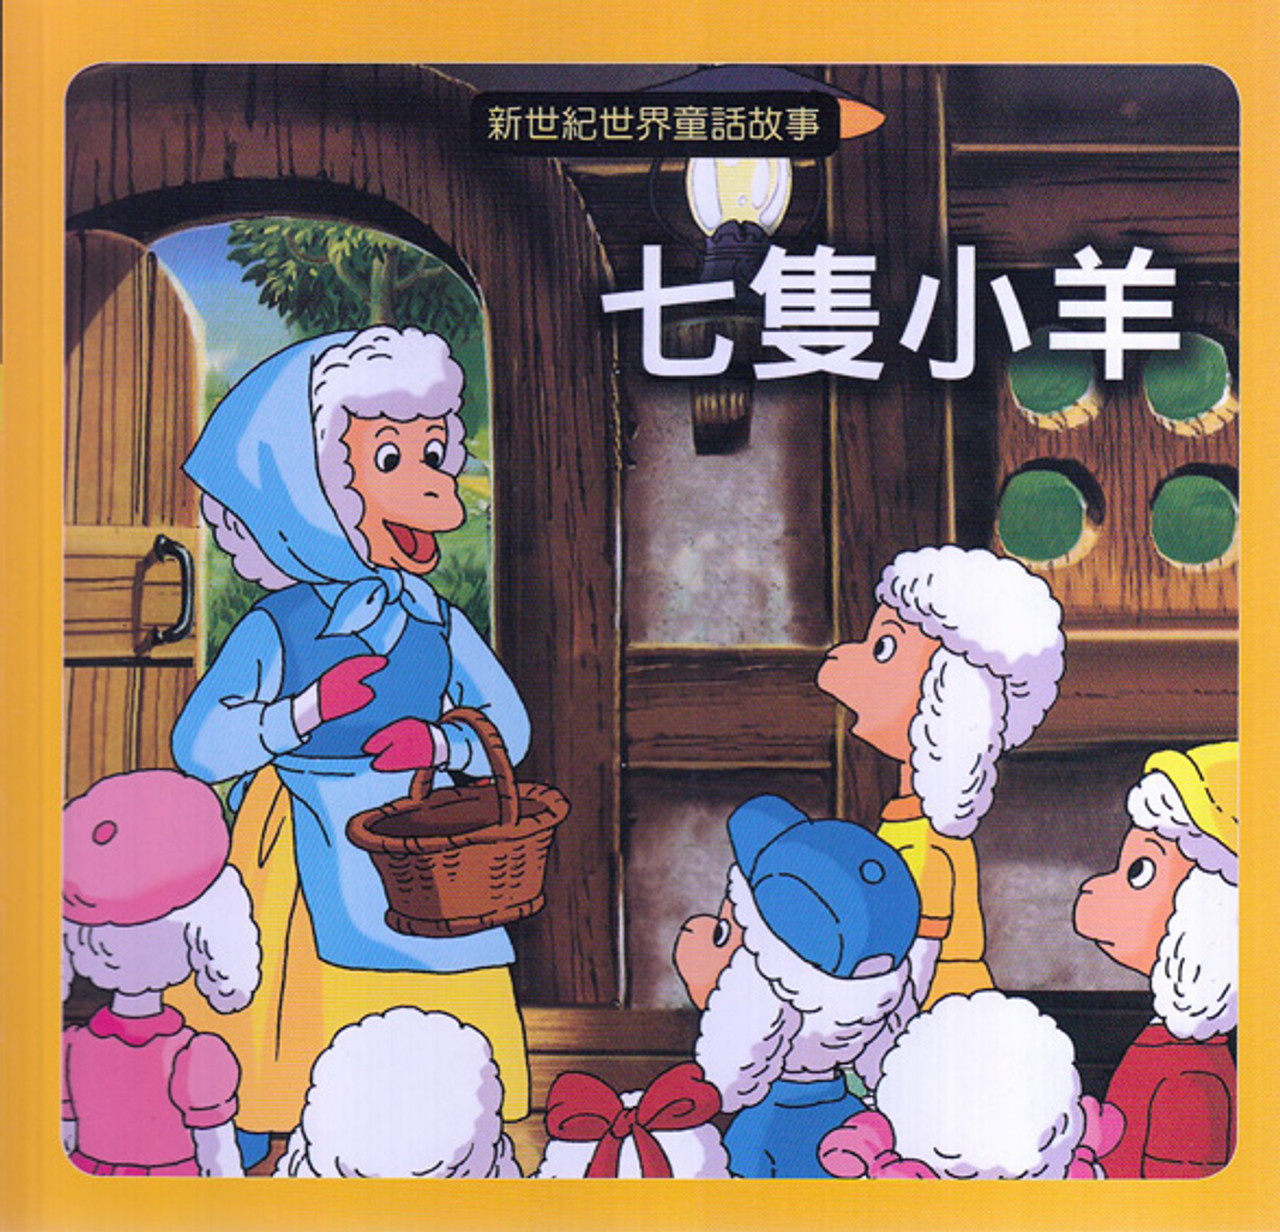 World Fairy Tales The Seven Sheep 新世紀童話故事 大野狼和七隻小羊 Chinesebooksforchildren